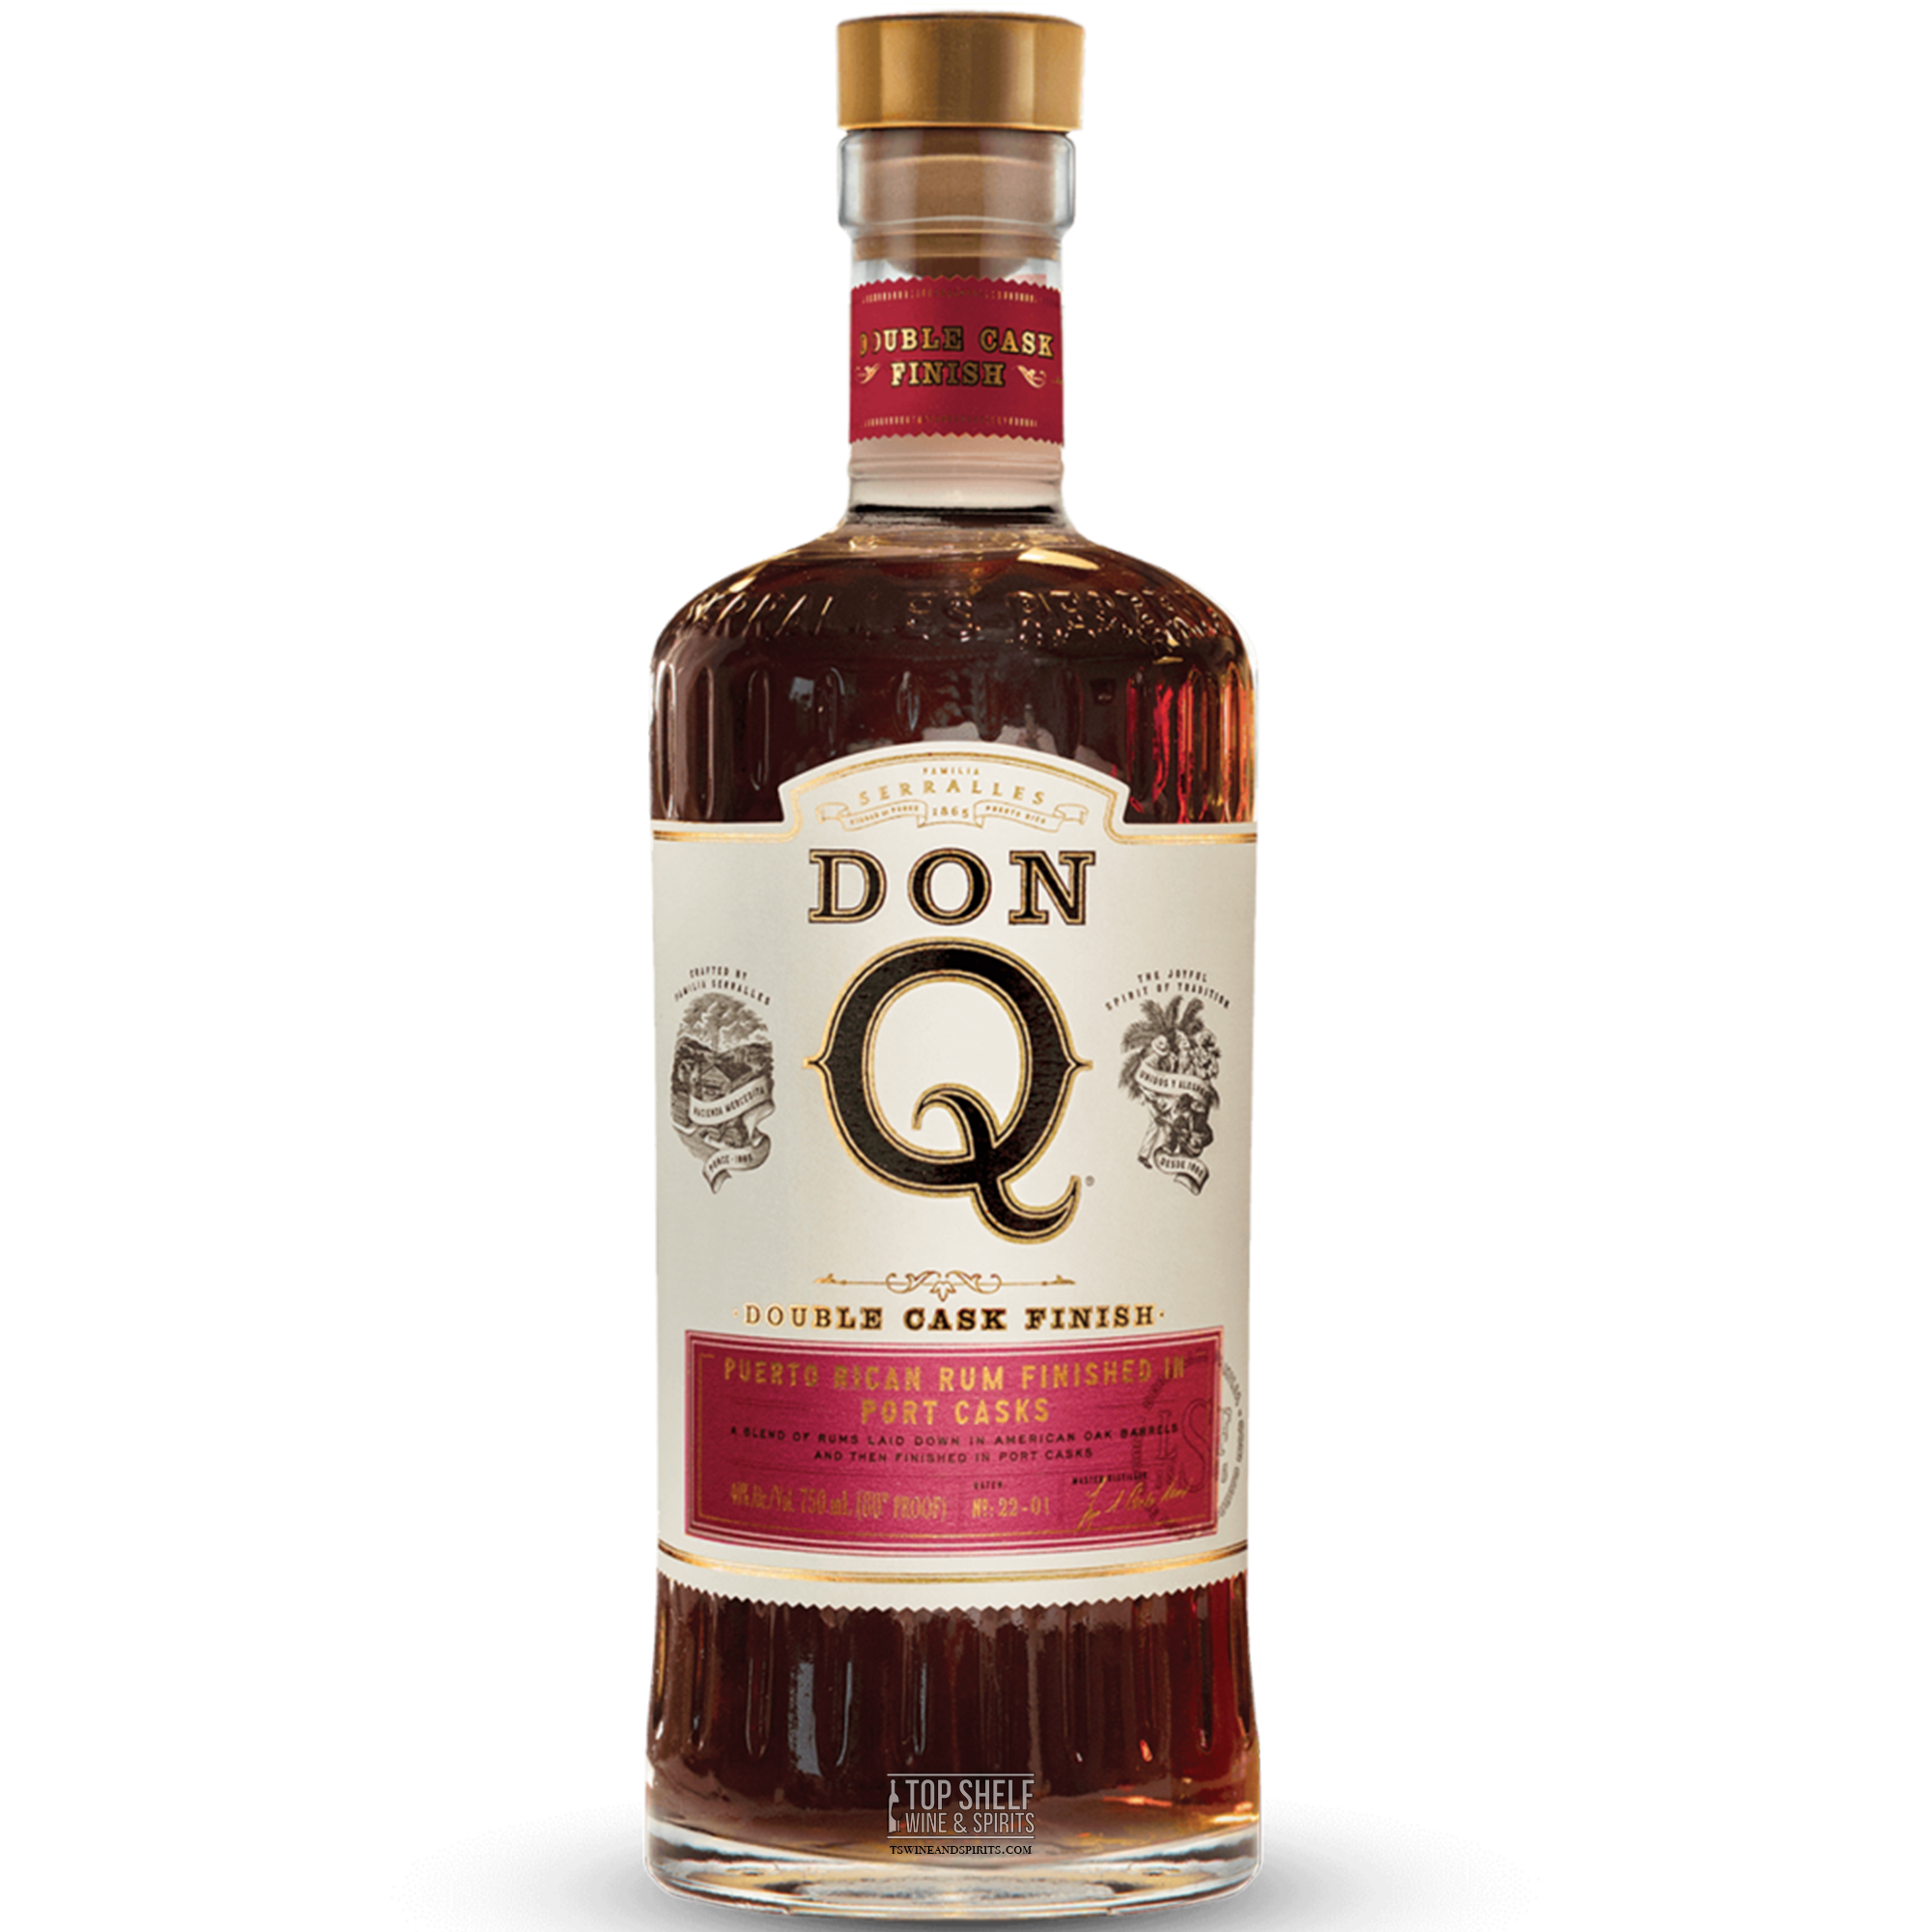 Don Q Double Aged Port Cask Finish Rum